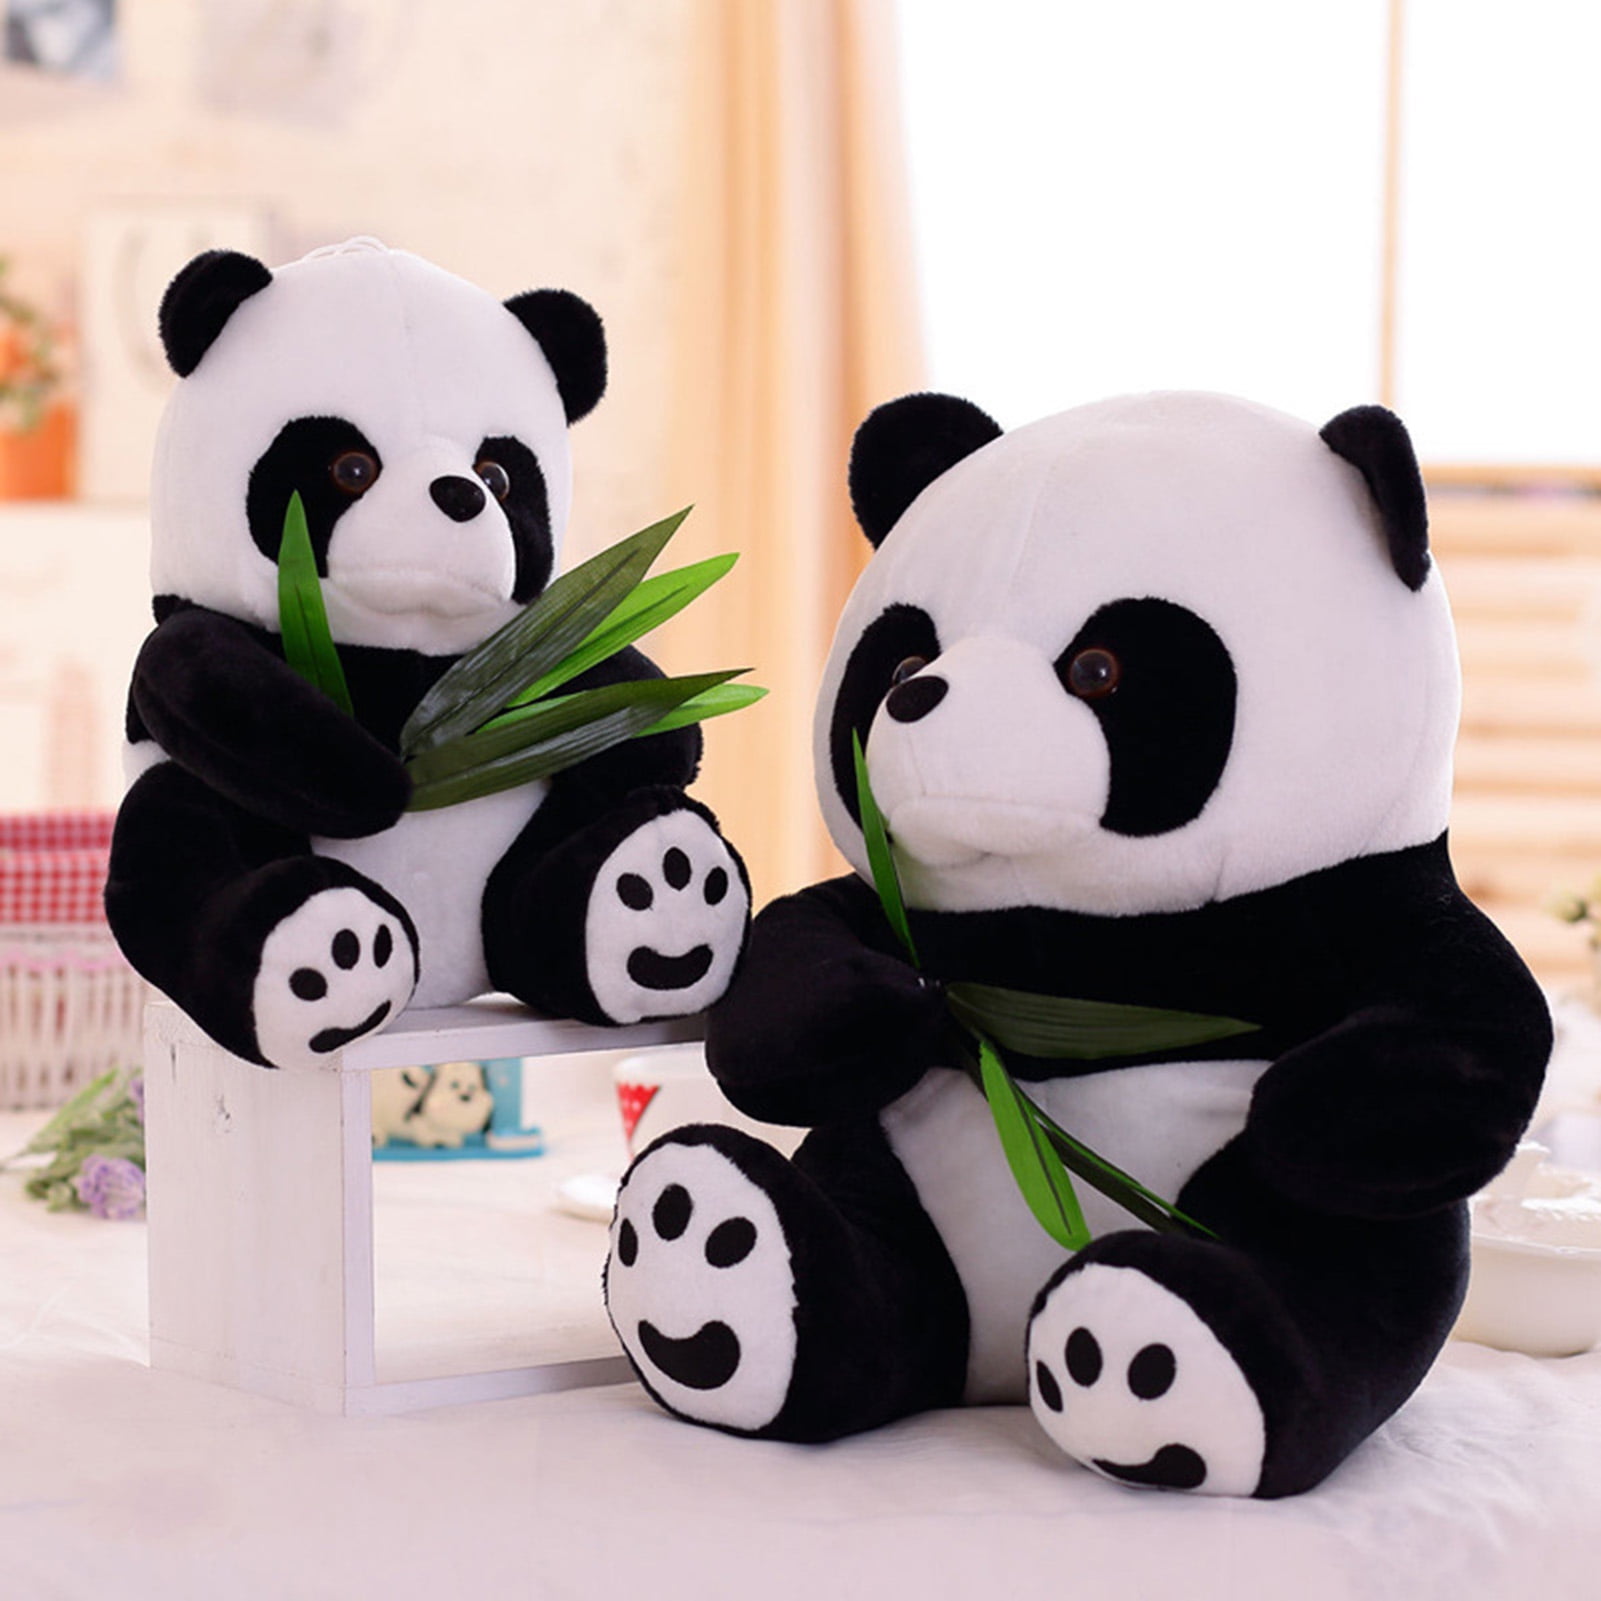 6" Cute Plush Doll Toy Bear Stuffed Animal Panda Doll Holiday Kids Gift 16cm 